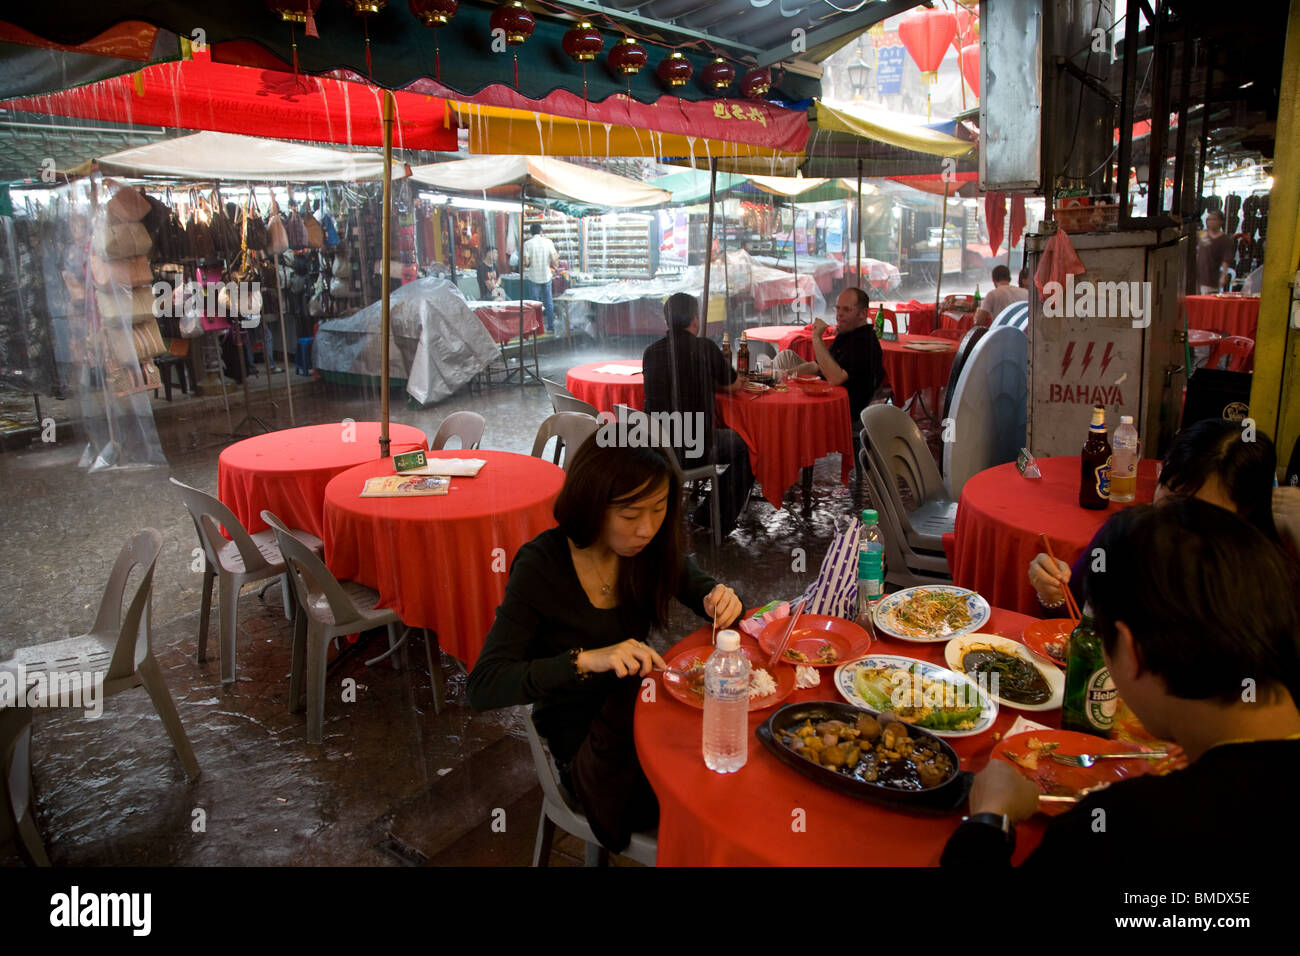 Petaling street market stall thunderstorm heavy rain Stock Photo